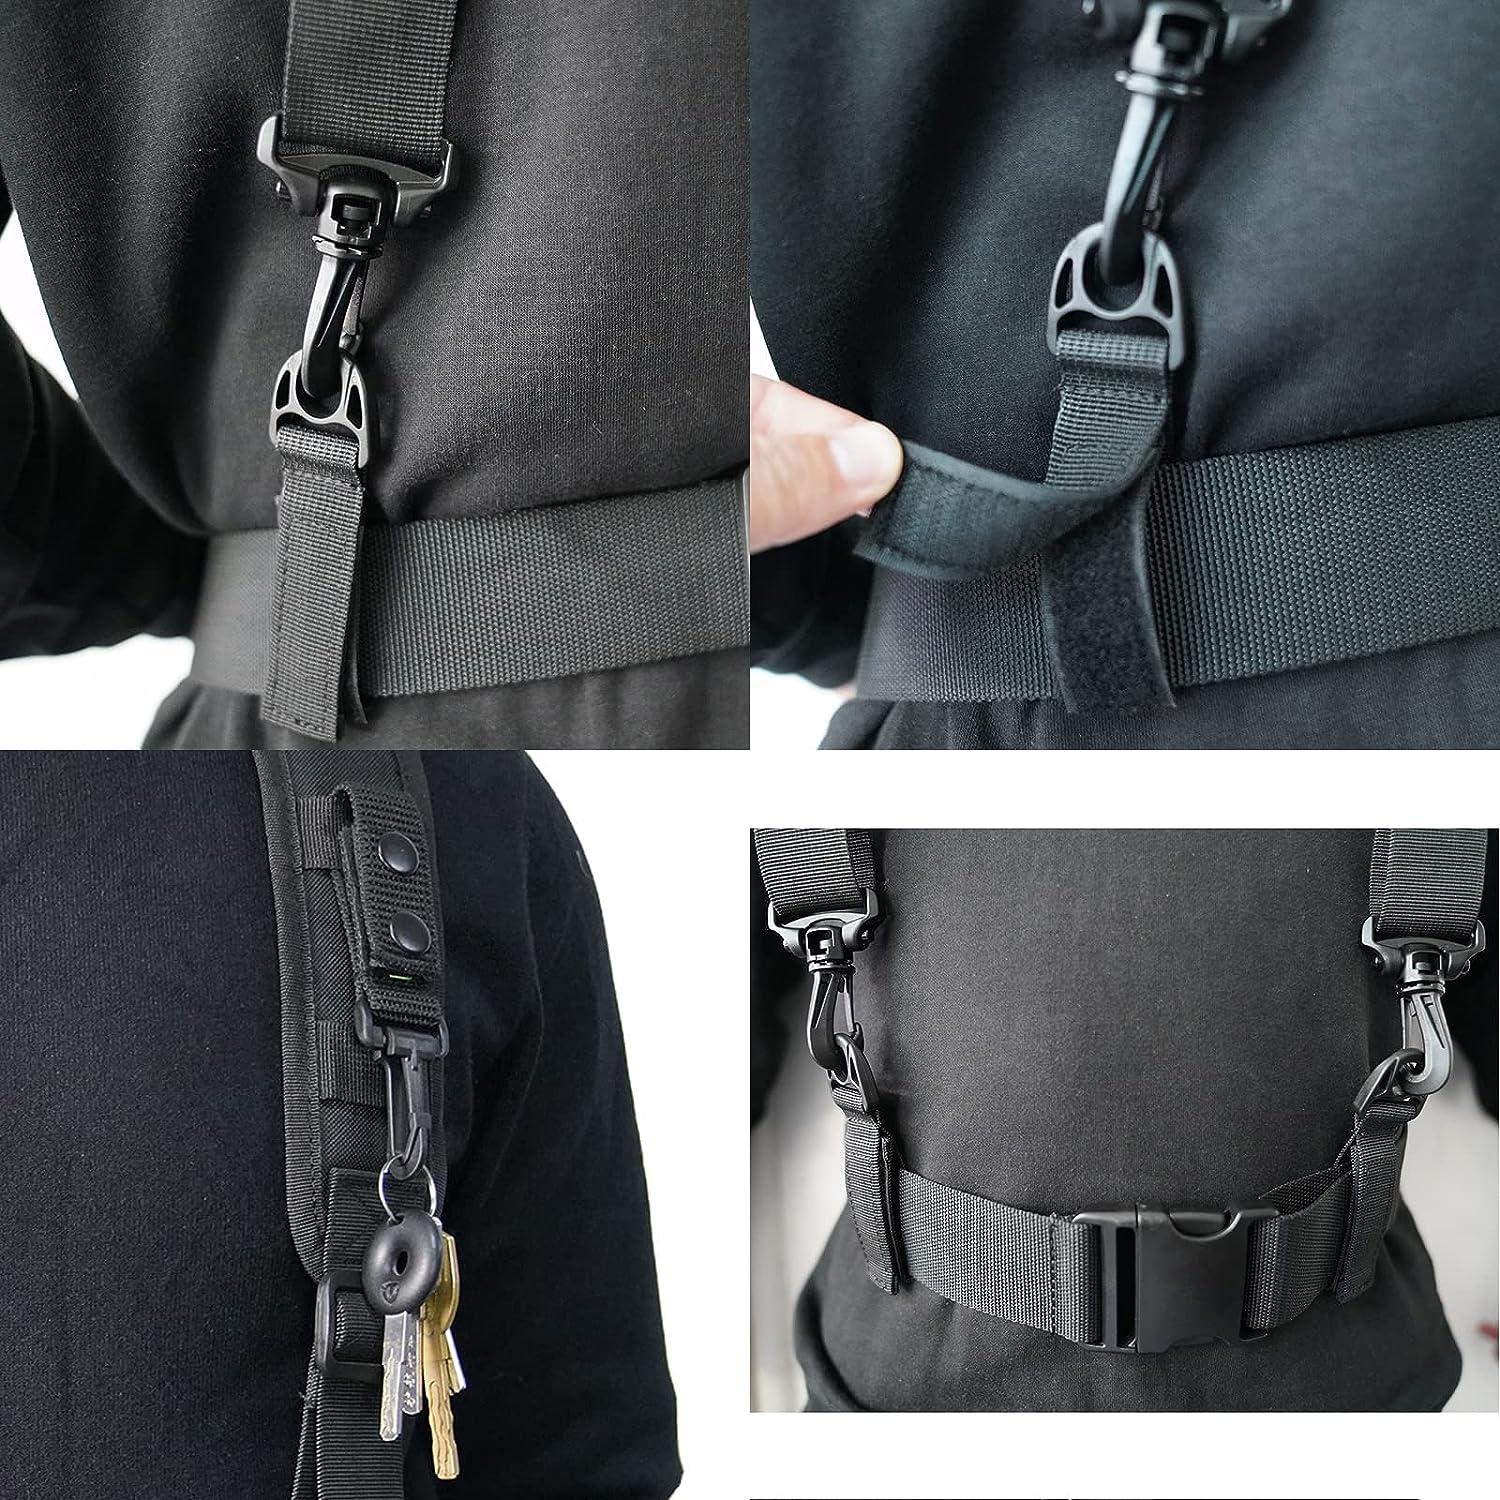 Suspender For Duty Belt Tactical Suspenders For Battle Belt Come With 4 Pcs  Duty Belt Keeper